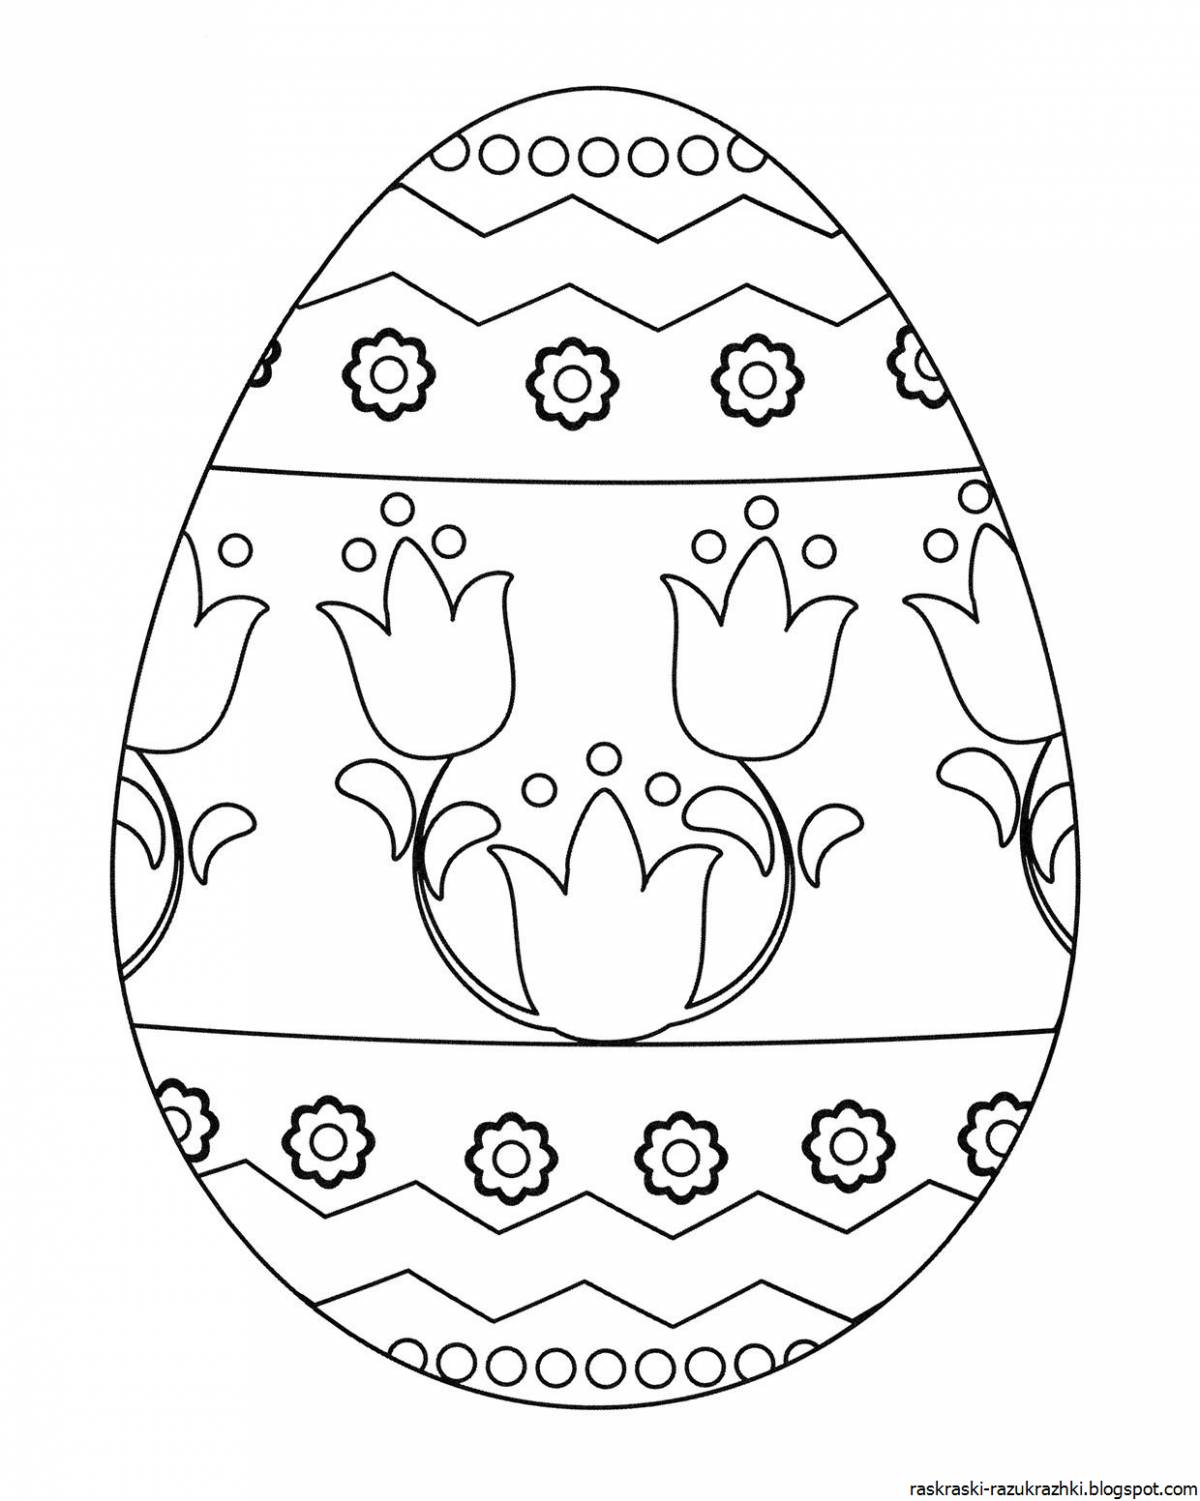 Fun coloring of easter eggs